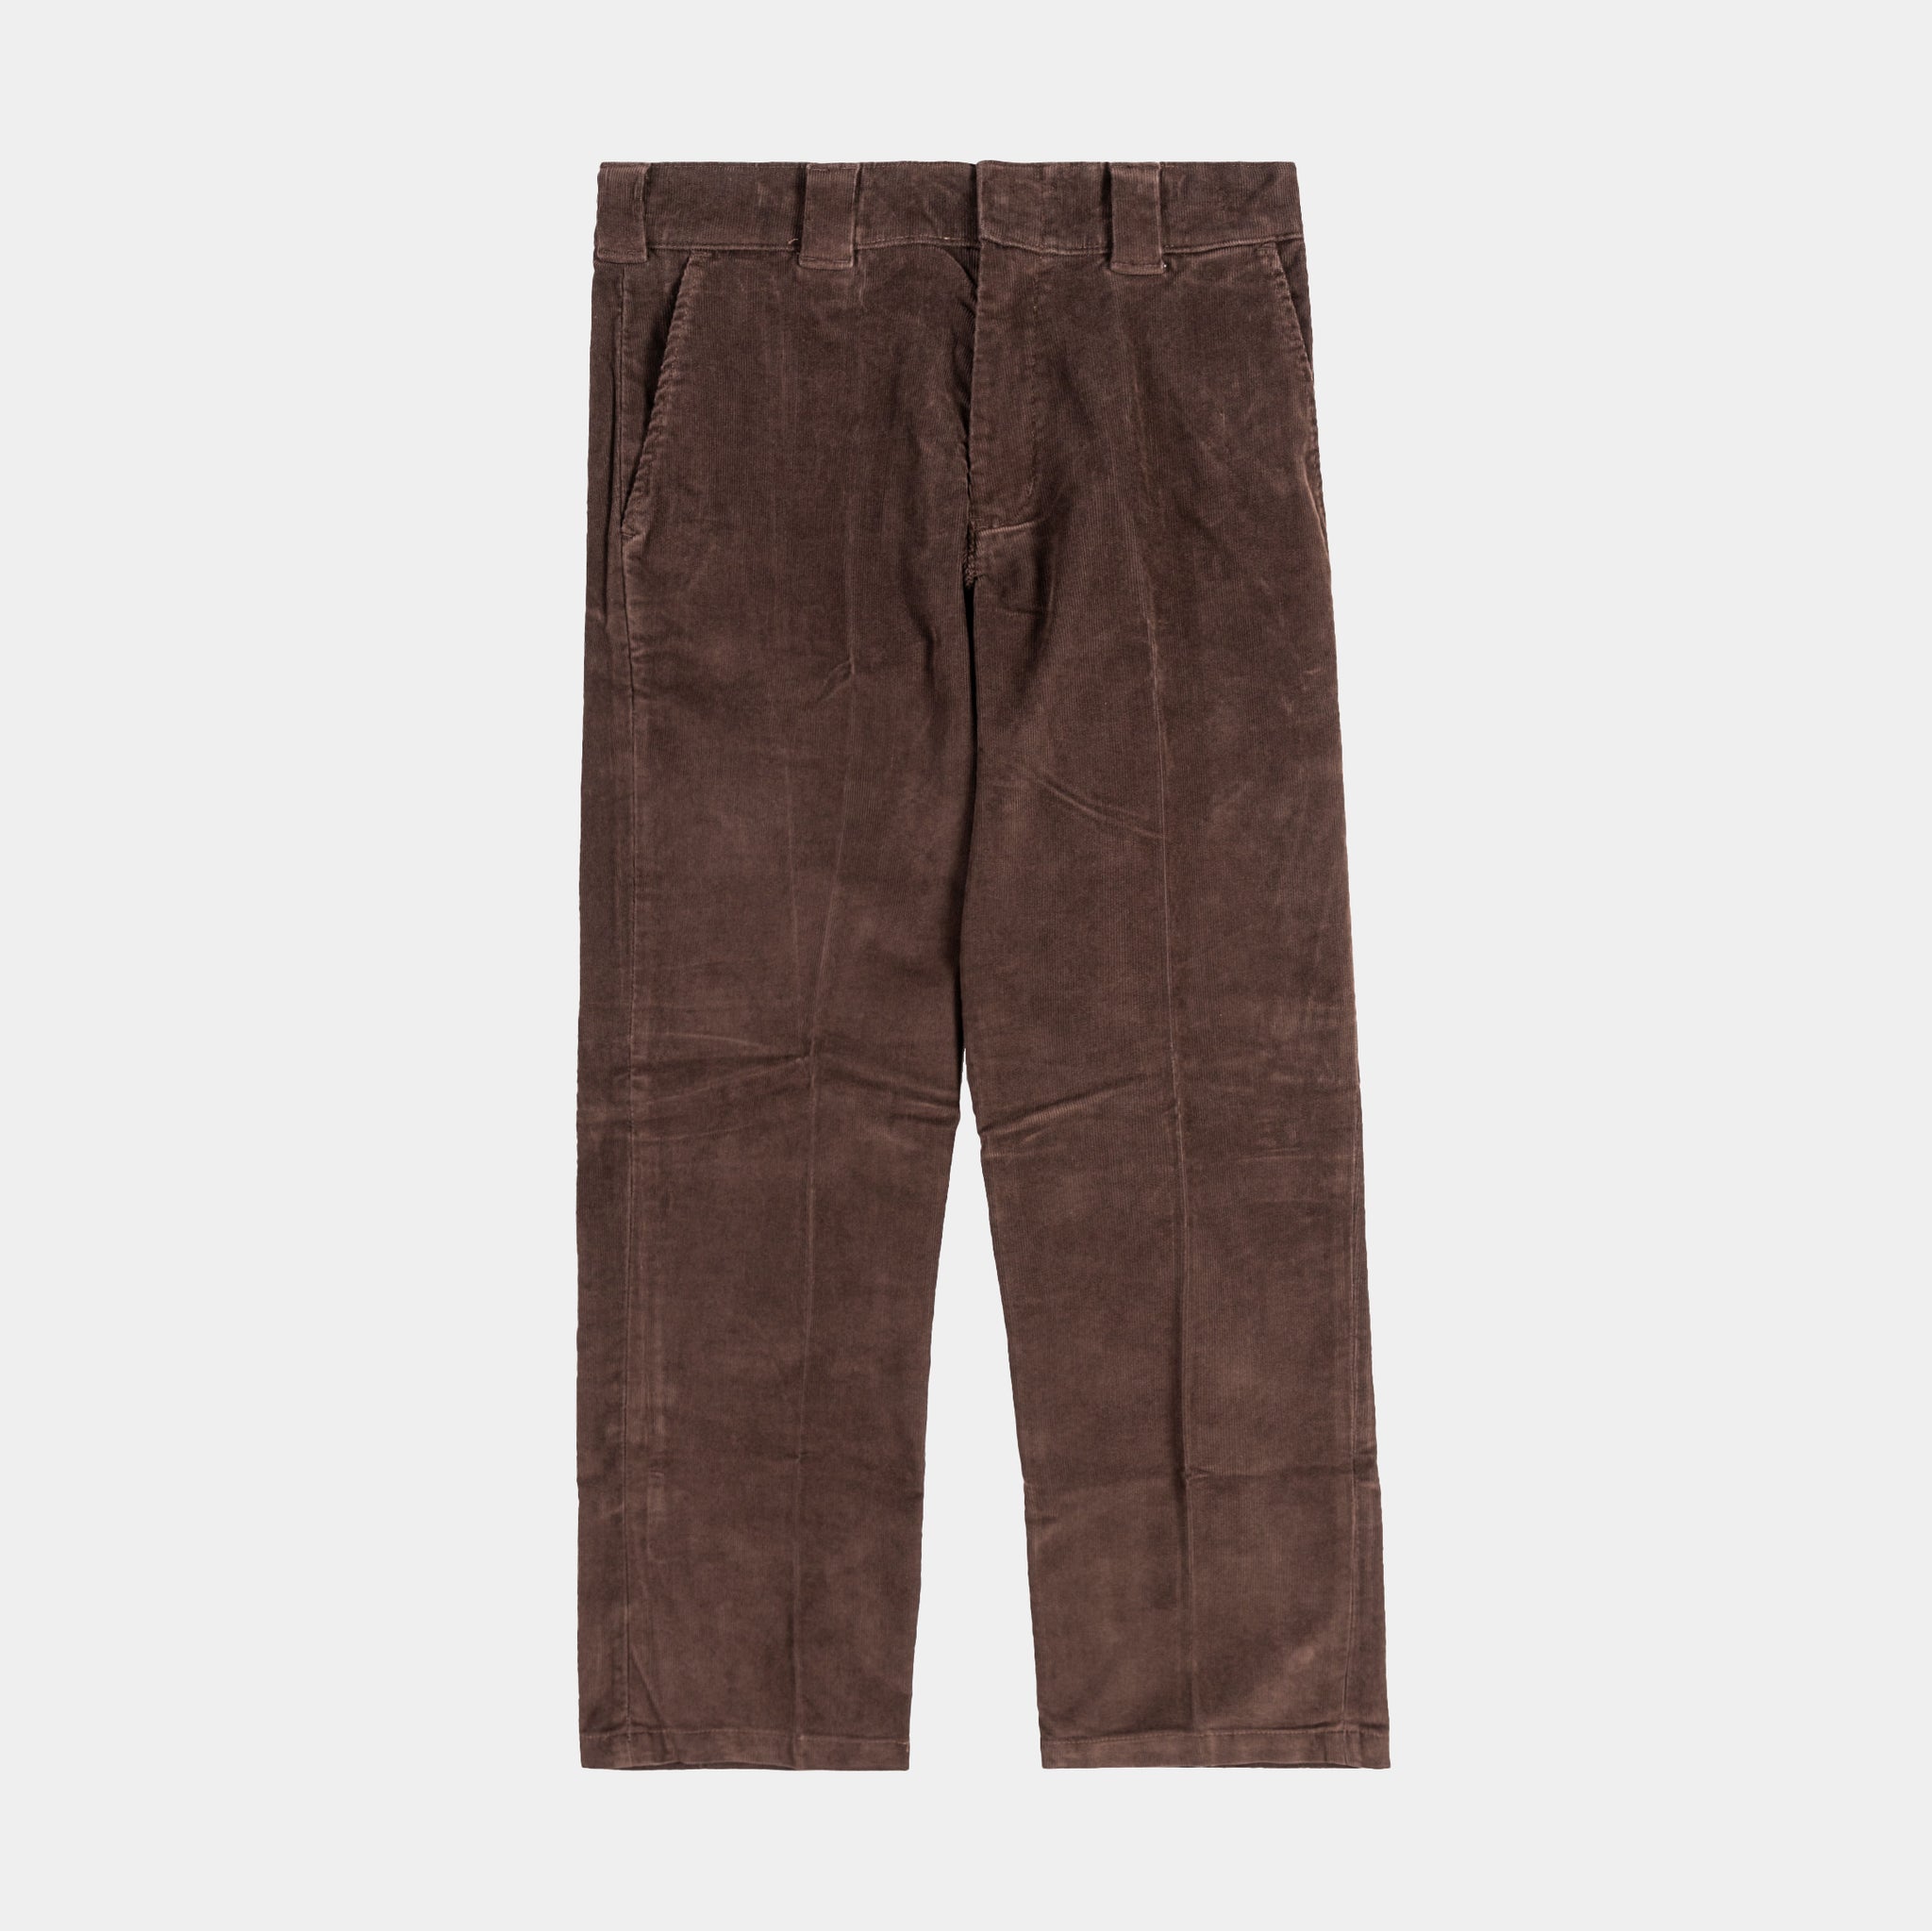 9-12 Months Mud Pie Corduroy Pants With Flannel Cuffs